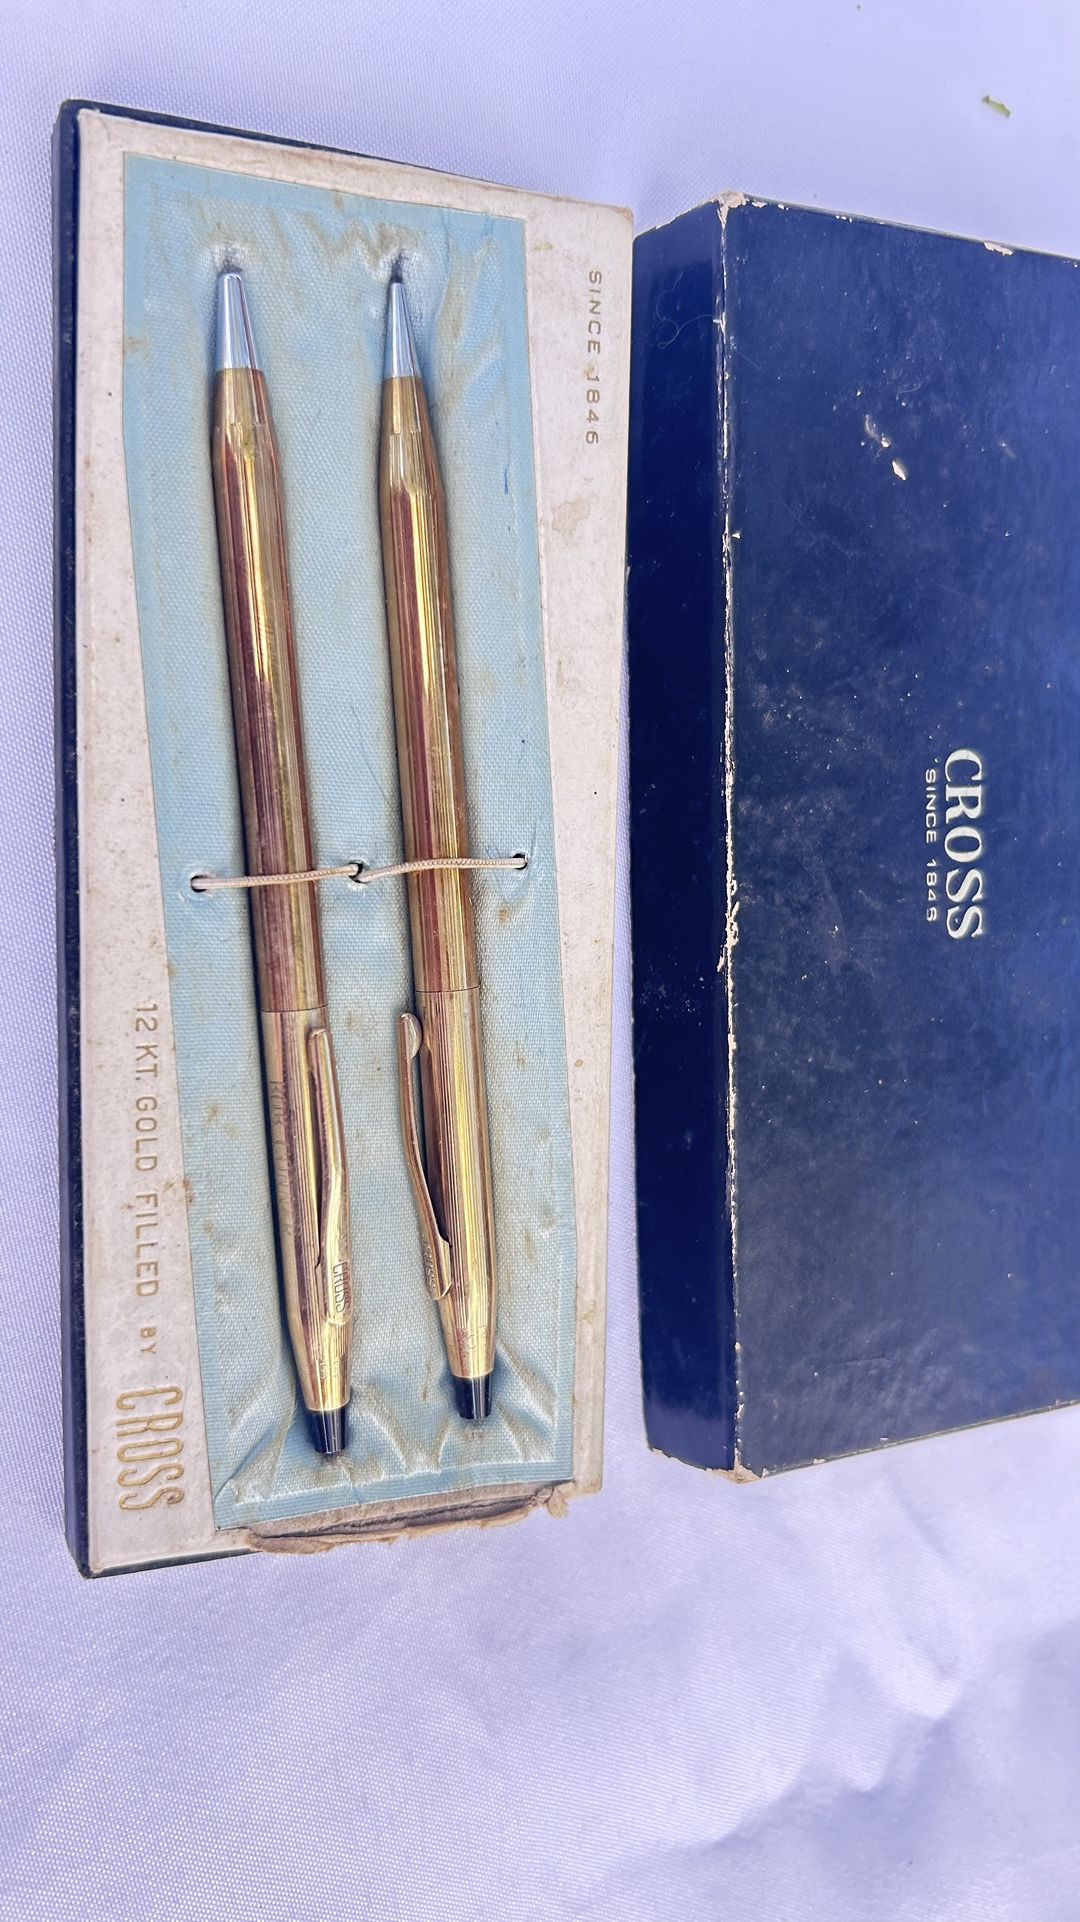 CROSS PEN SET IN BOX Pair Of Men’s Vintage Ink Pens 14kt Gold Filled pensw